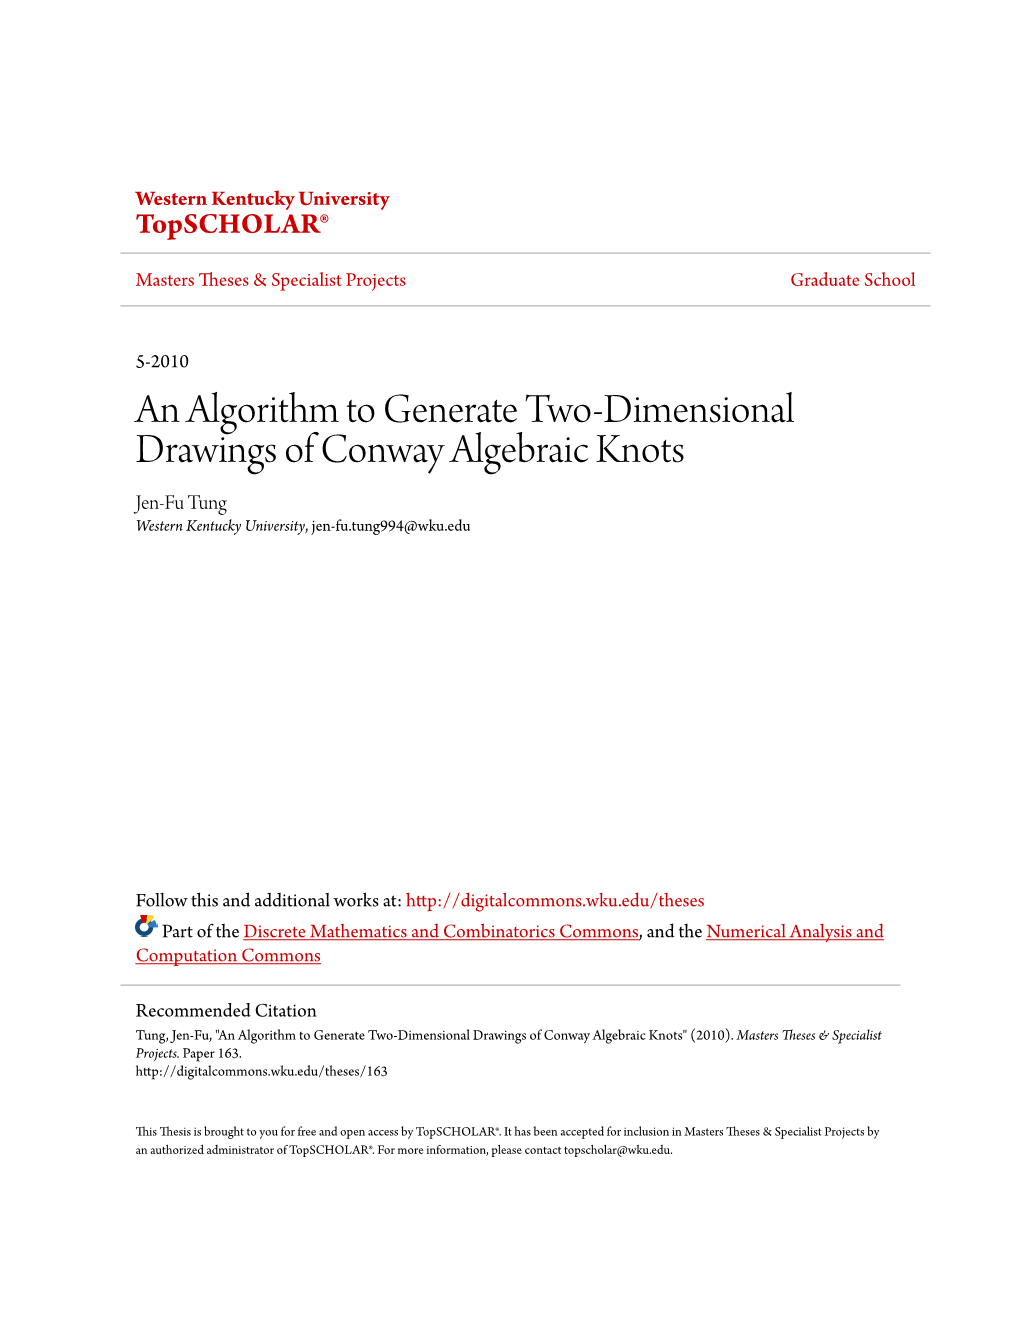 An Algorithm to Generate Two-Dimensional Drawings of Conway Algebraic Knots Jen-Fu Tung Western Kentucky University, Jen-Fu.Tung994@Wku.Edu